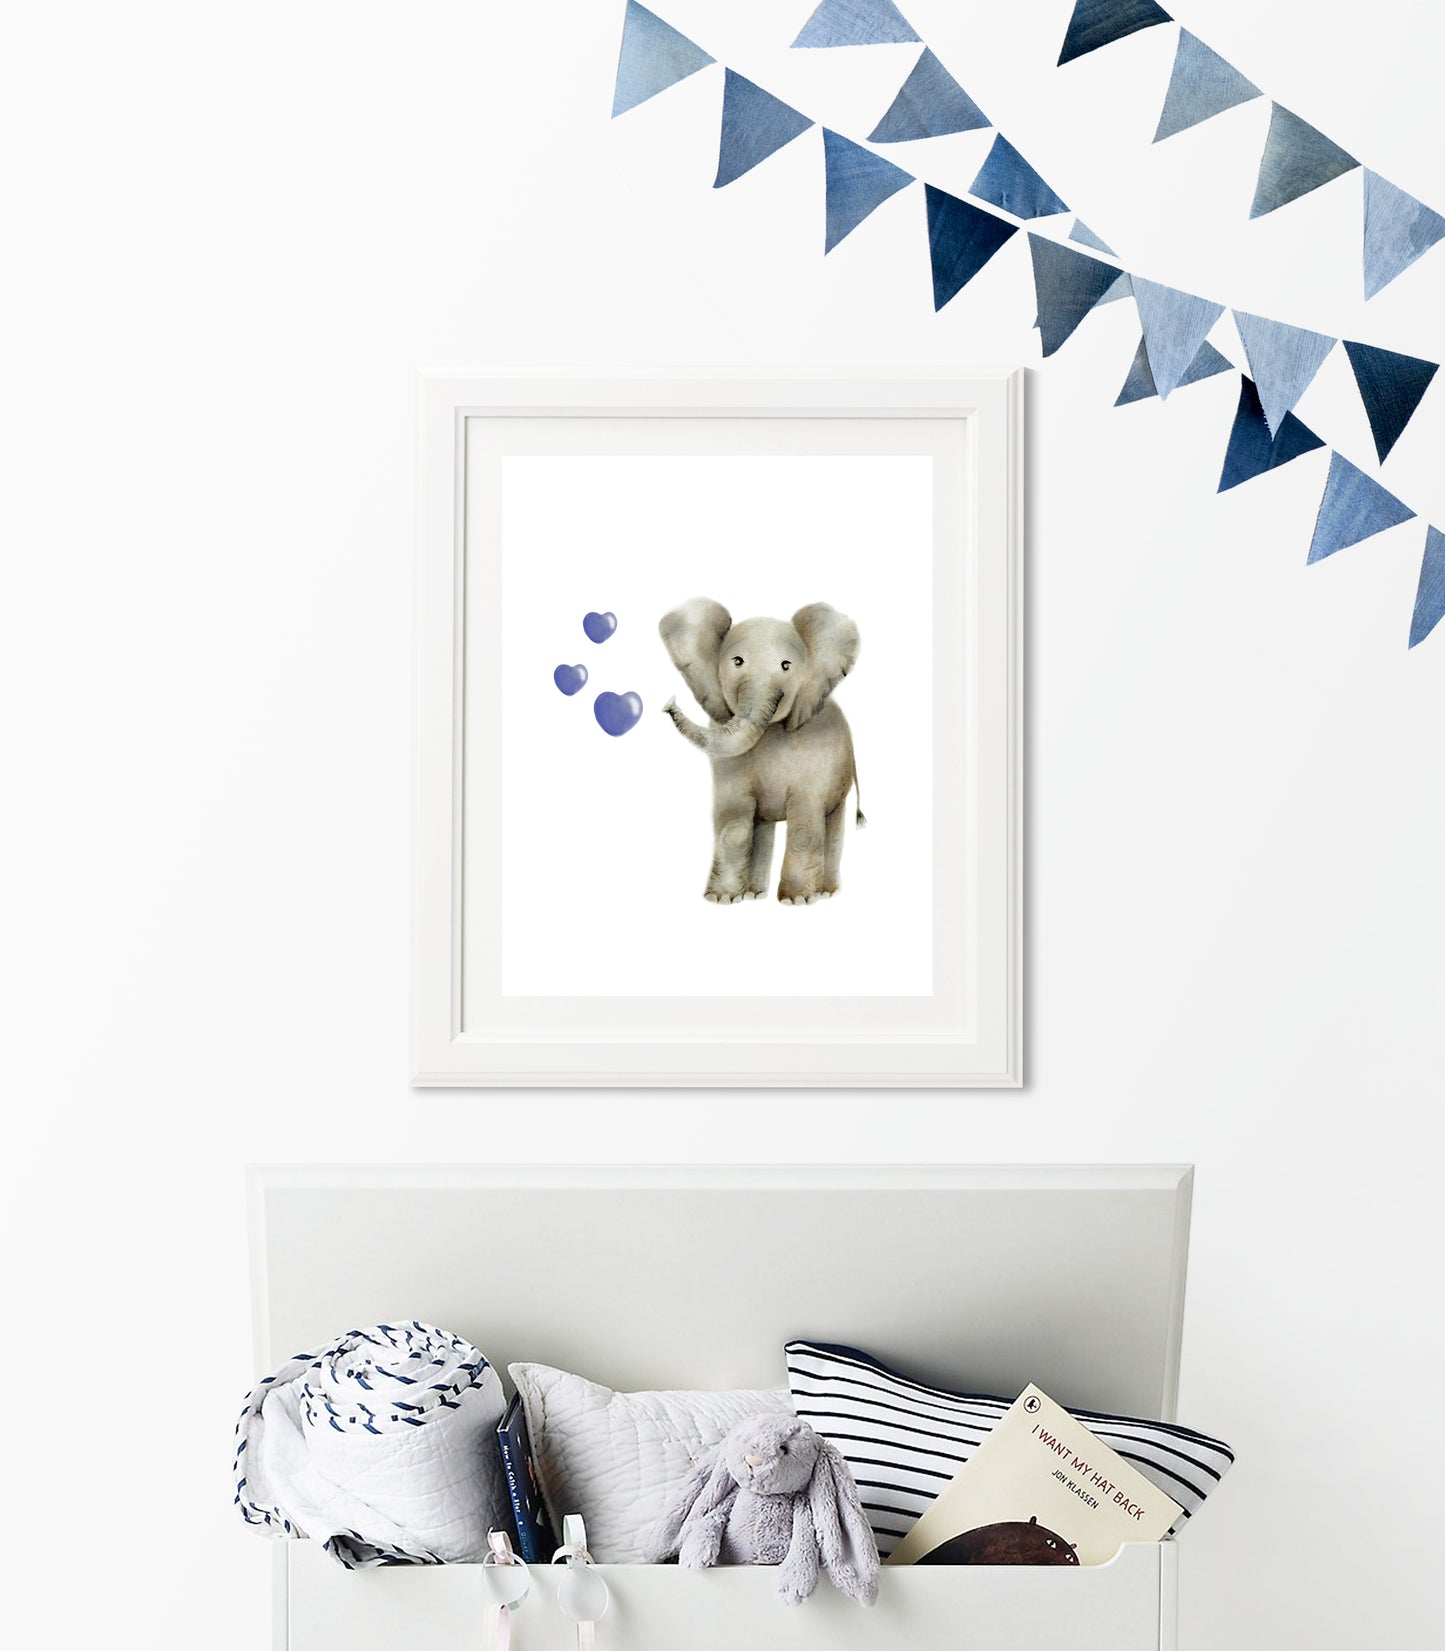 Baby Elephant with Hearts - Studio Q - Art by Nicky Quartermaine Scott